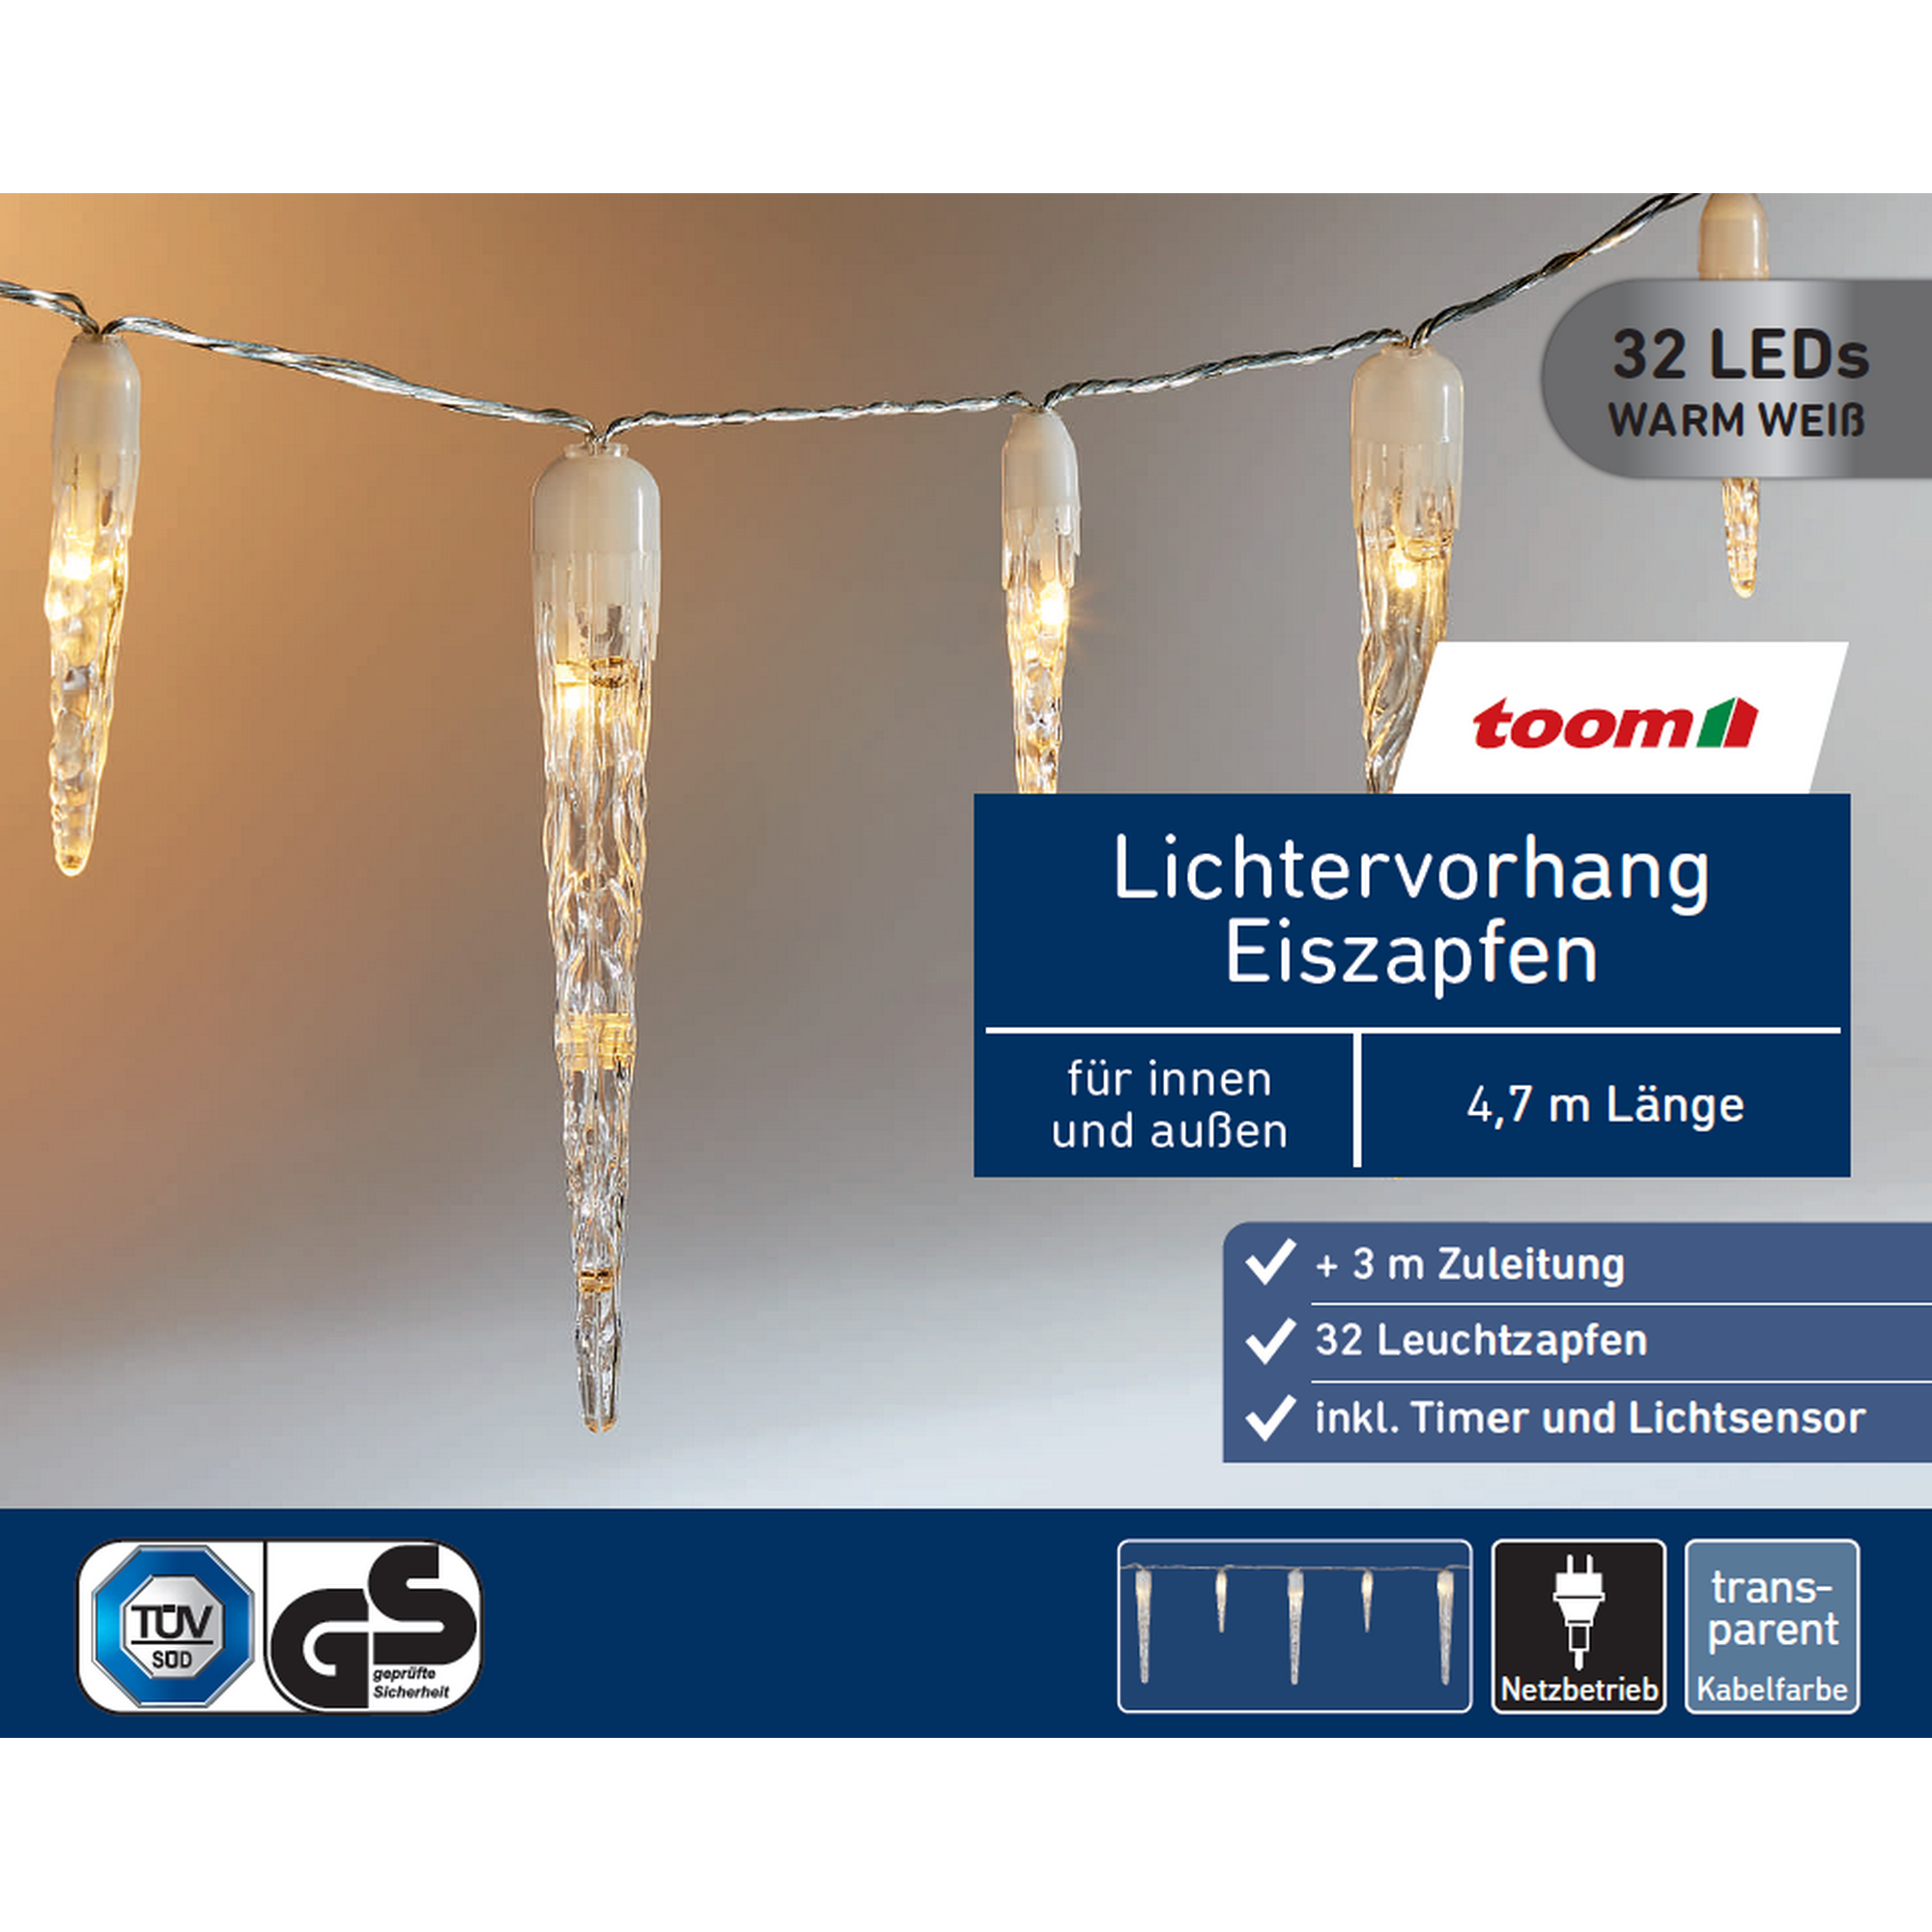 LED-Lichtervorhang 'Eiszapfen' 32 LEDs warmweiß 470 cm + product picture